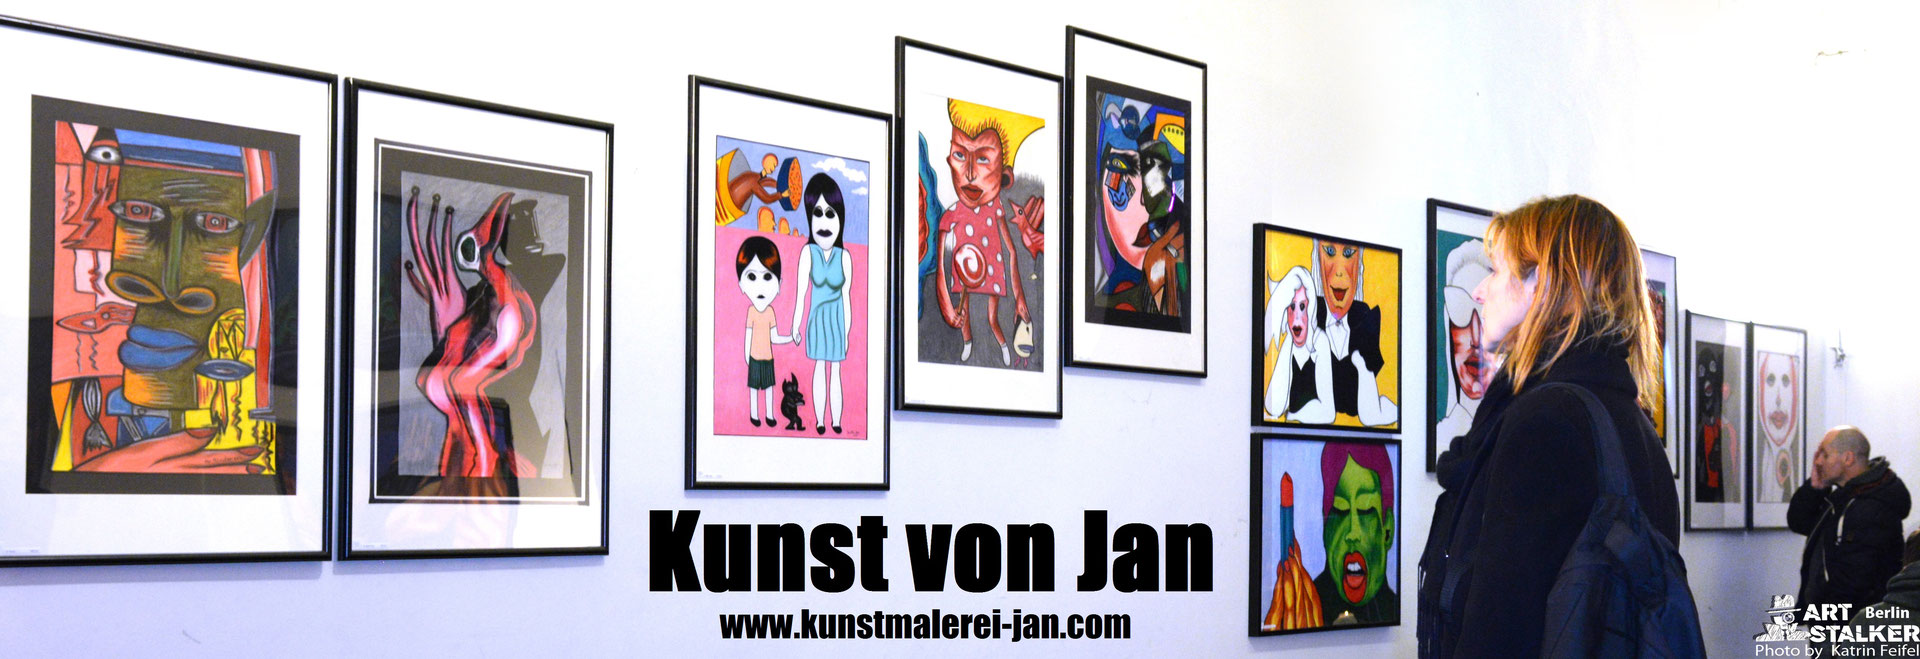 (c) Kunstmalerei-jan.com